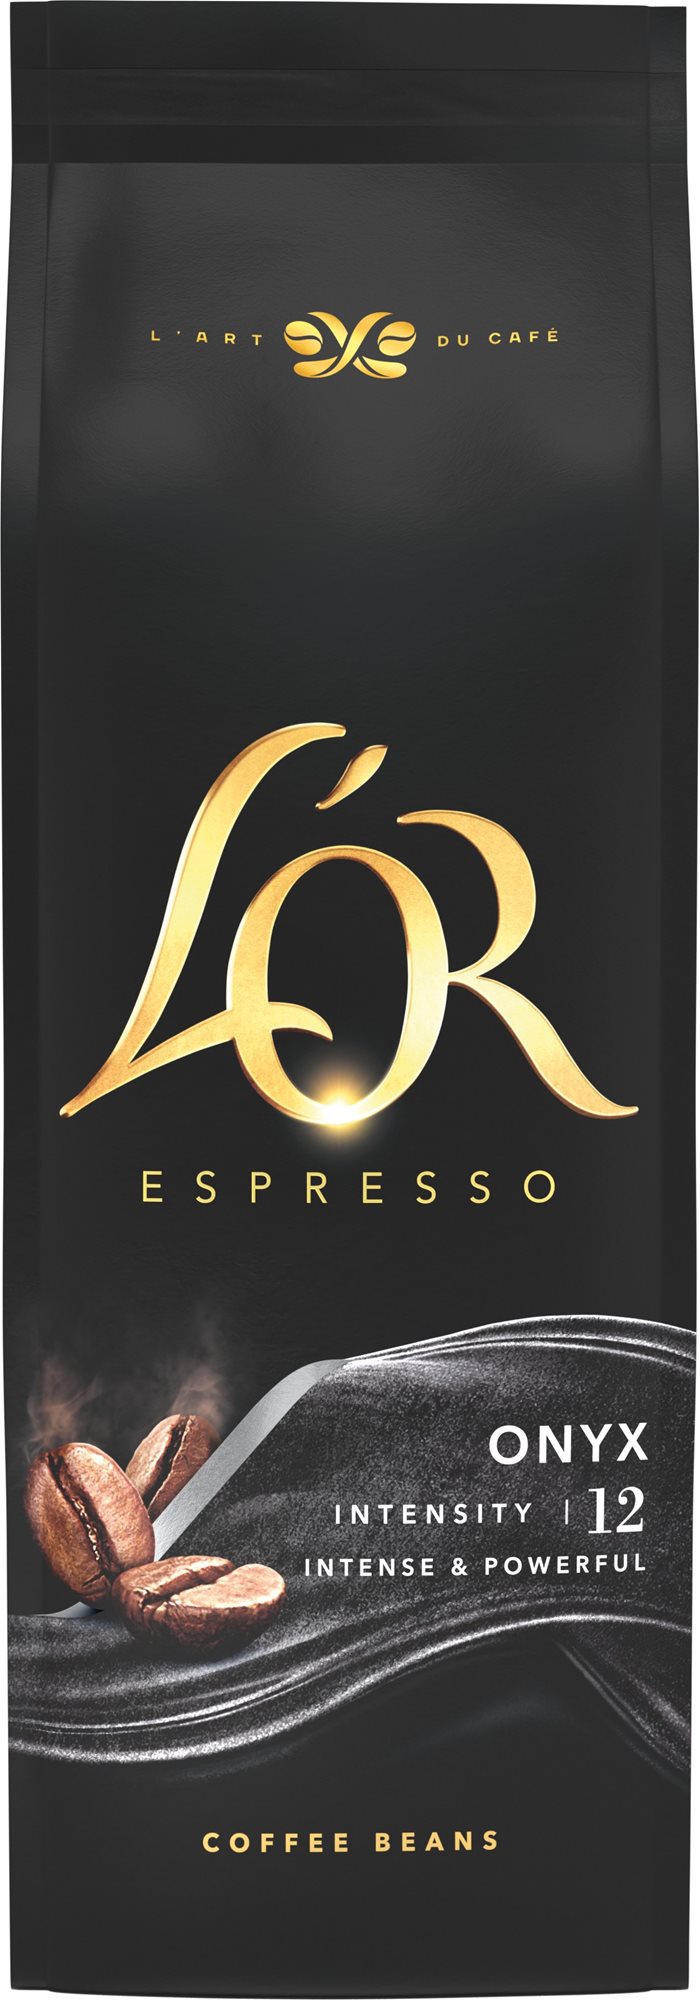 L'OR Espresso Onyx, szemes kávé, 500 g